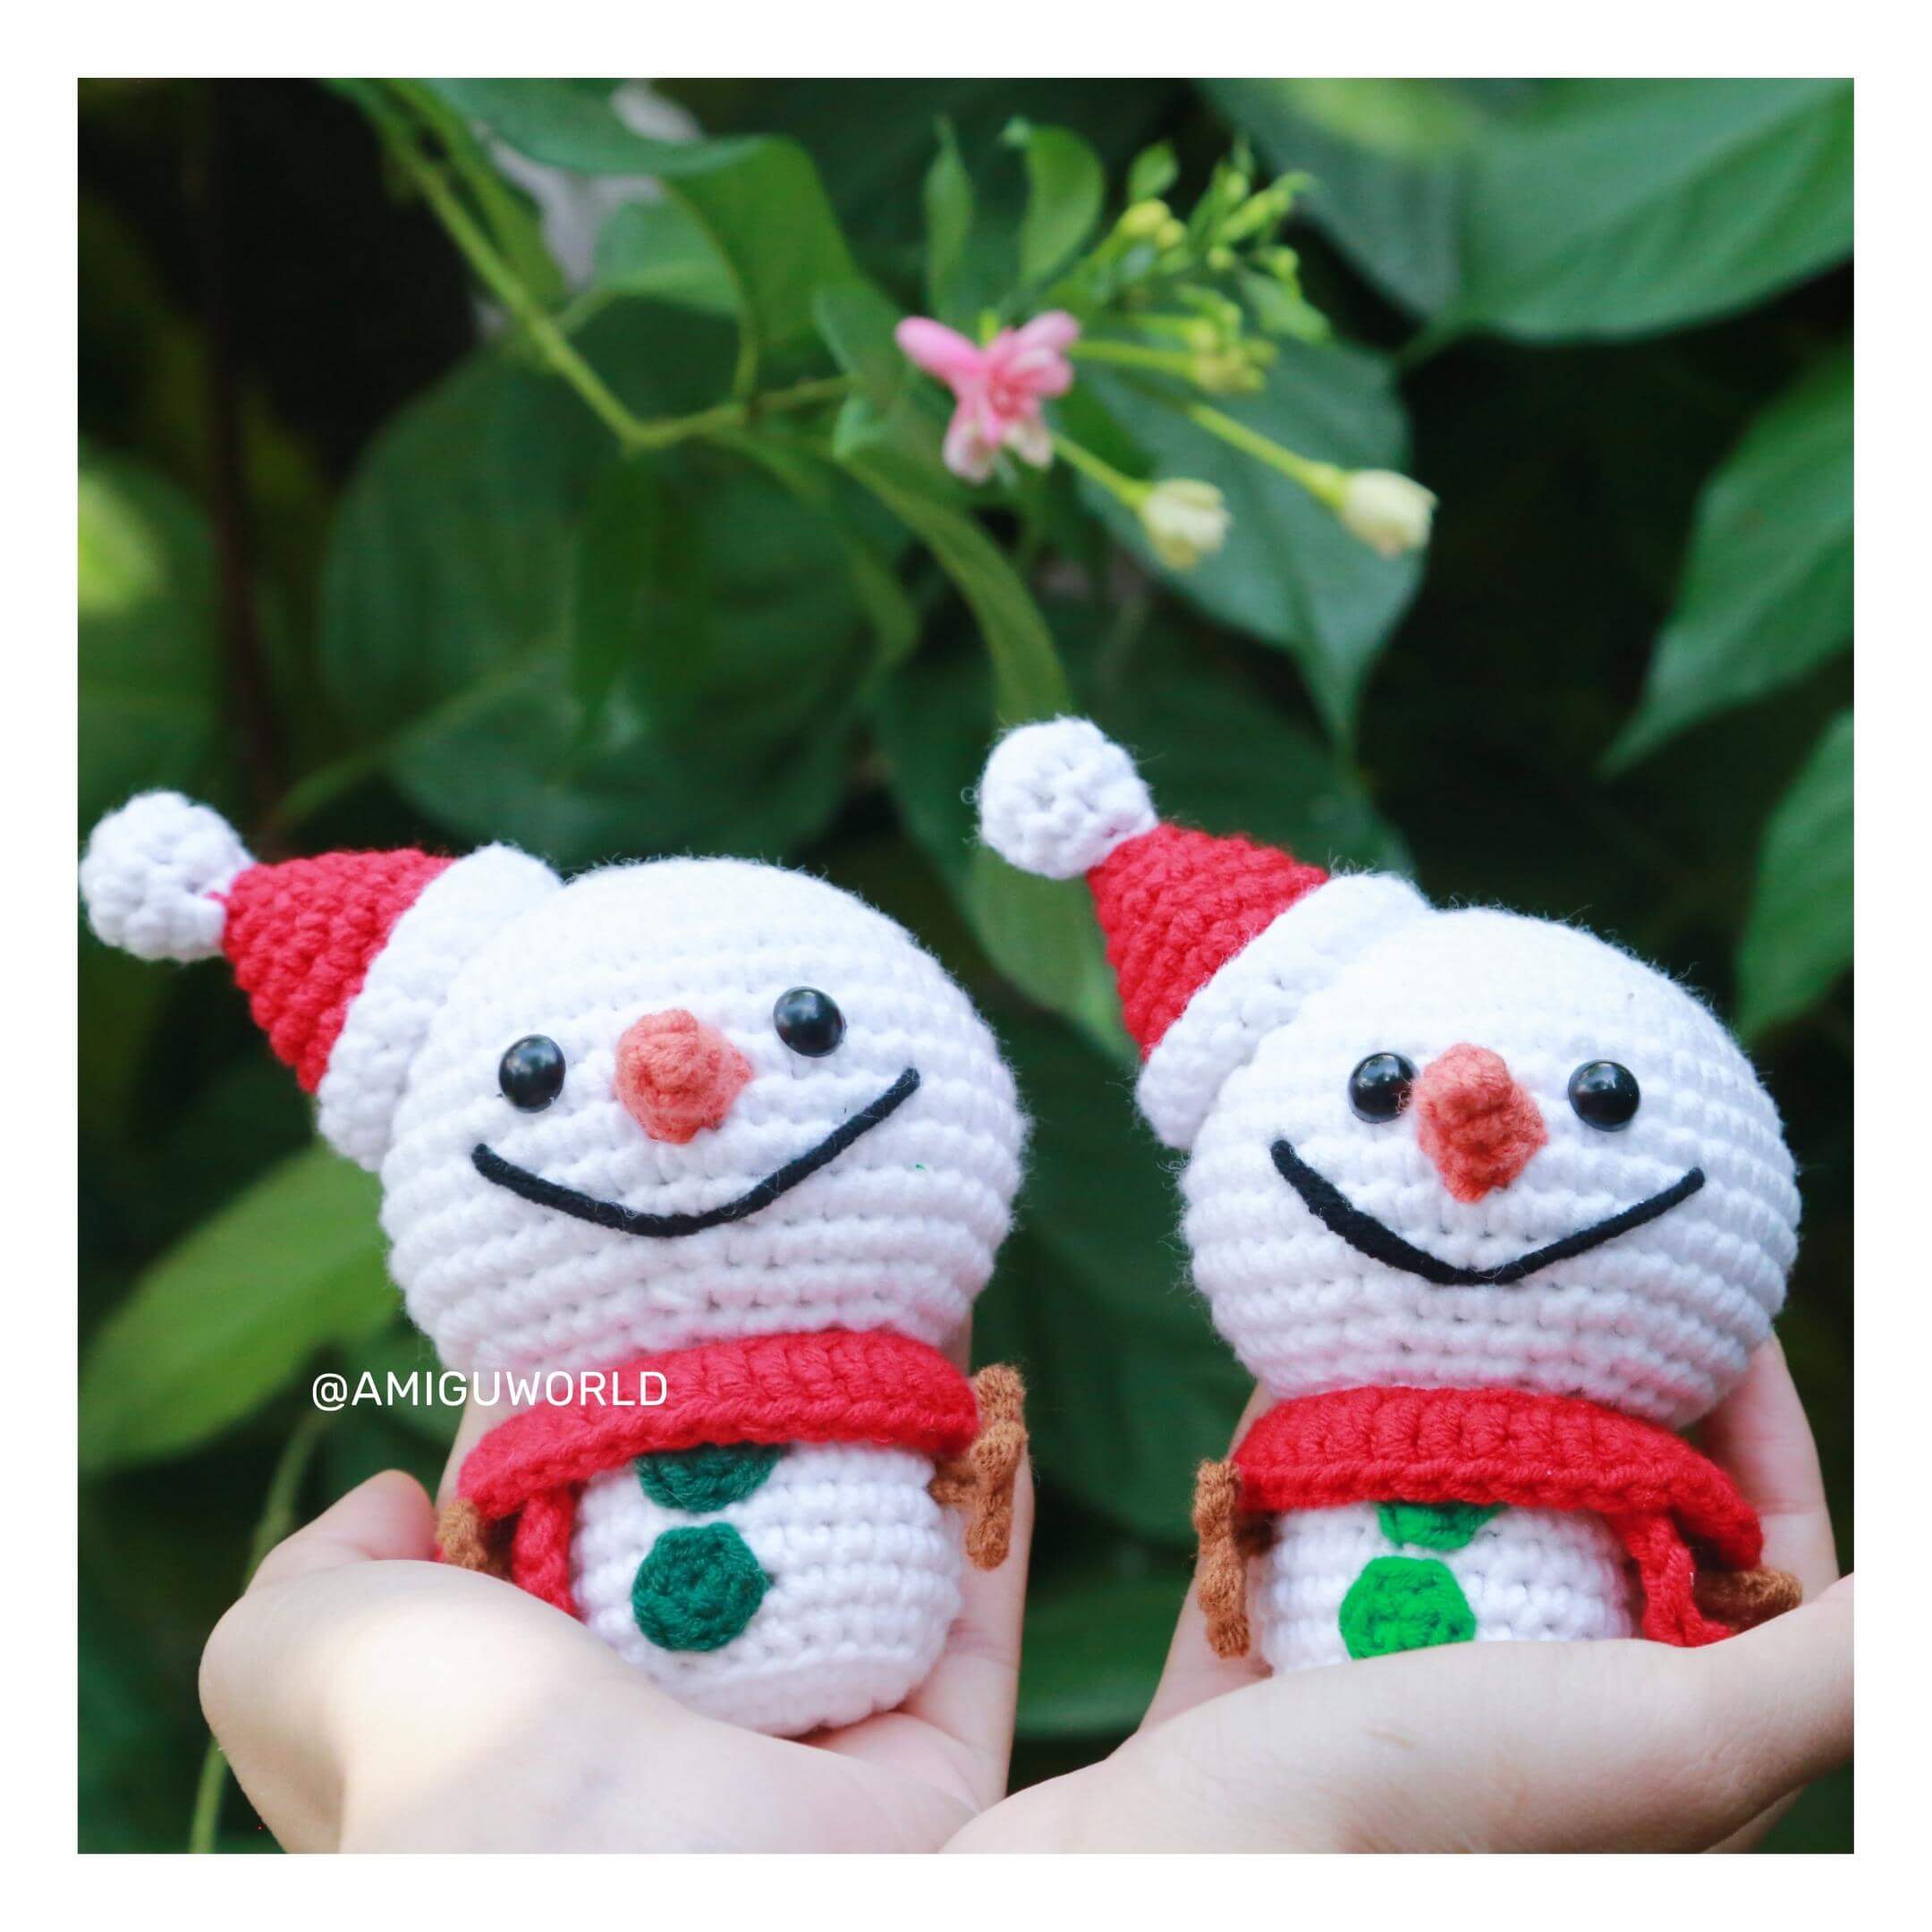 snowman-amigurumi-crochet-pattern-by-amiguworld (10)